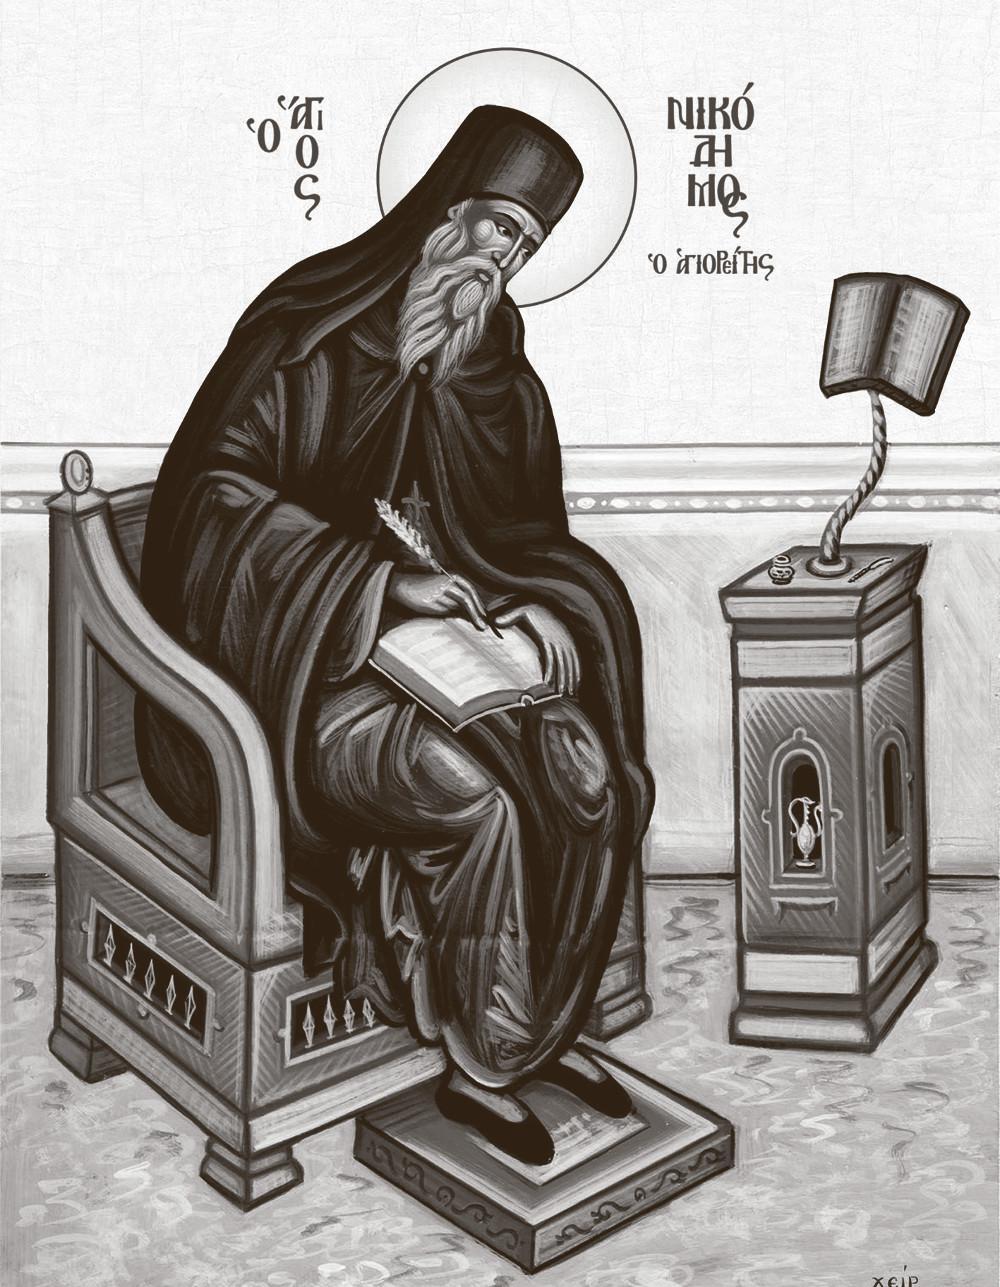 Aγιος Νικόδημος ο Αγιορείτης, o πνευματικός ευεργέτης των Ελλήνων